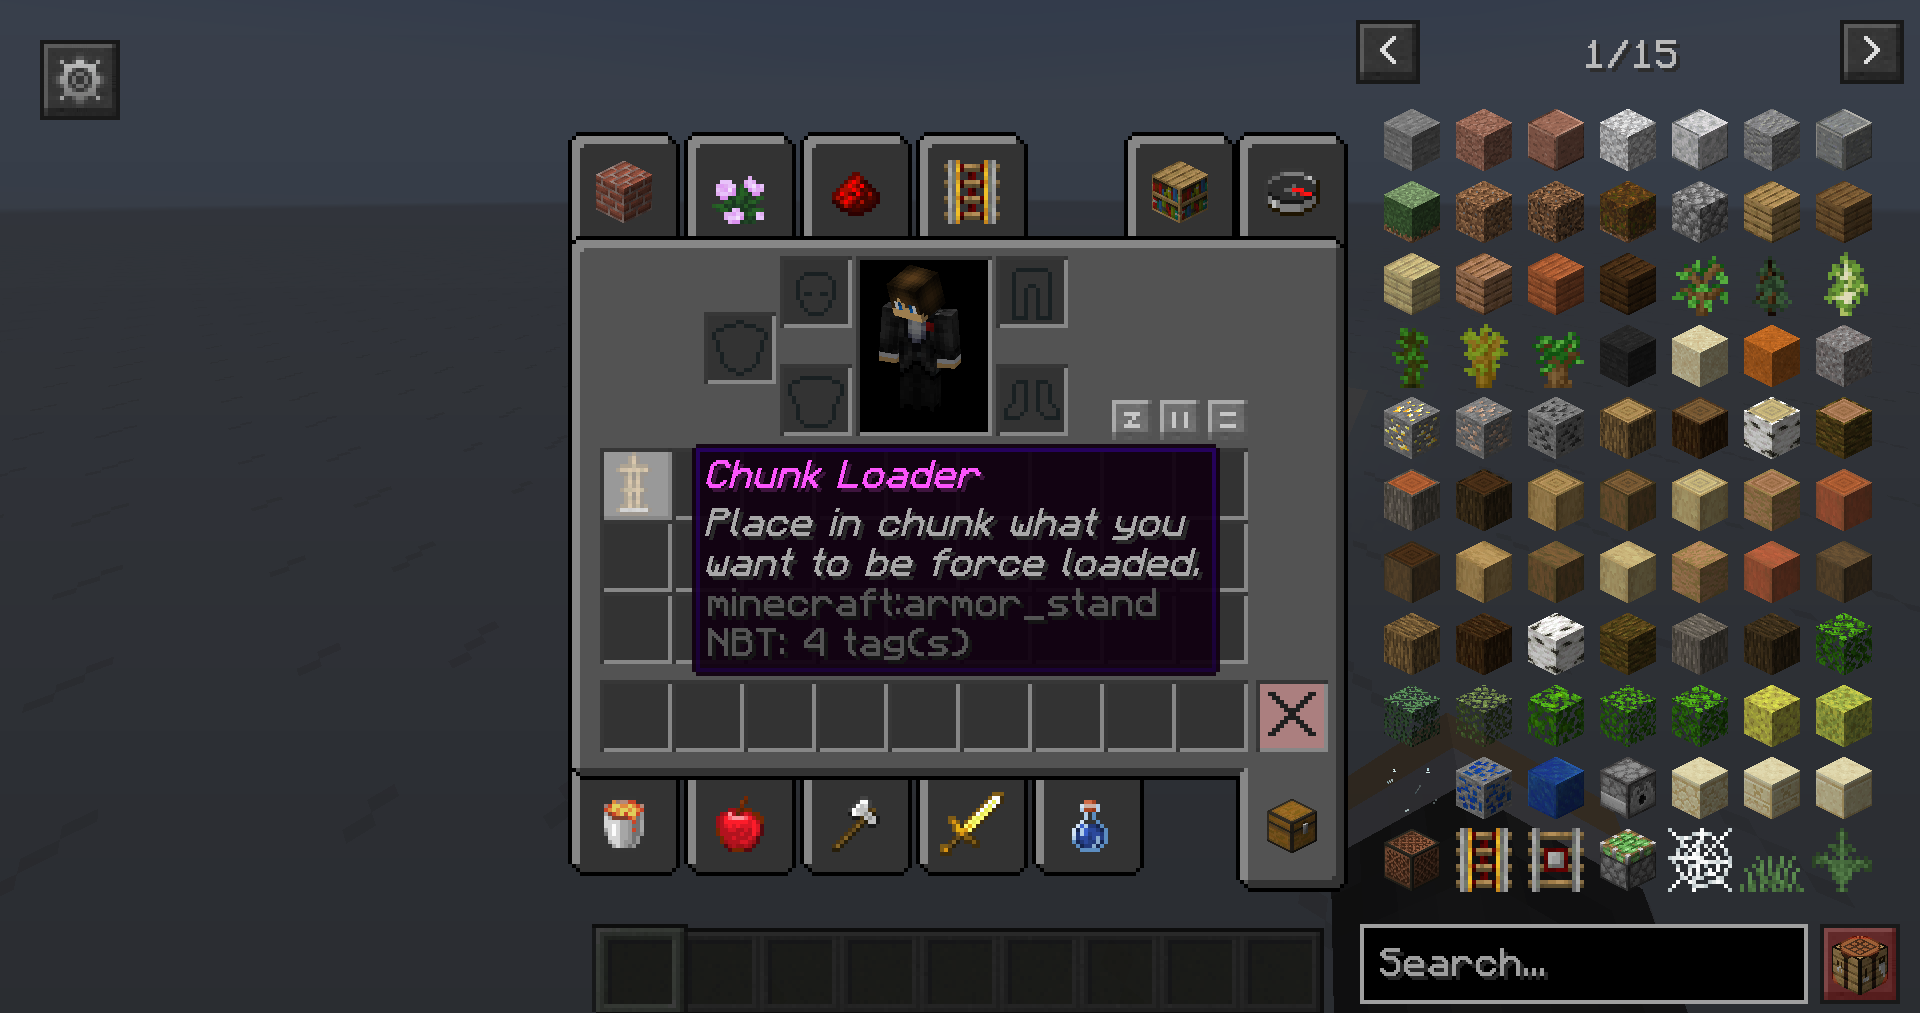 Chunk loader [item]